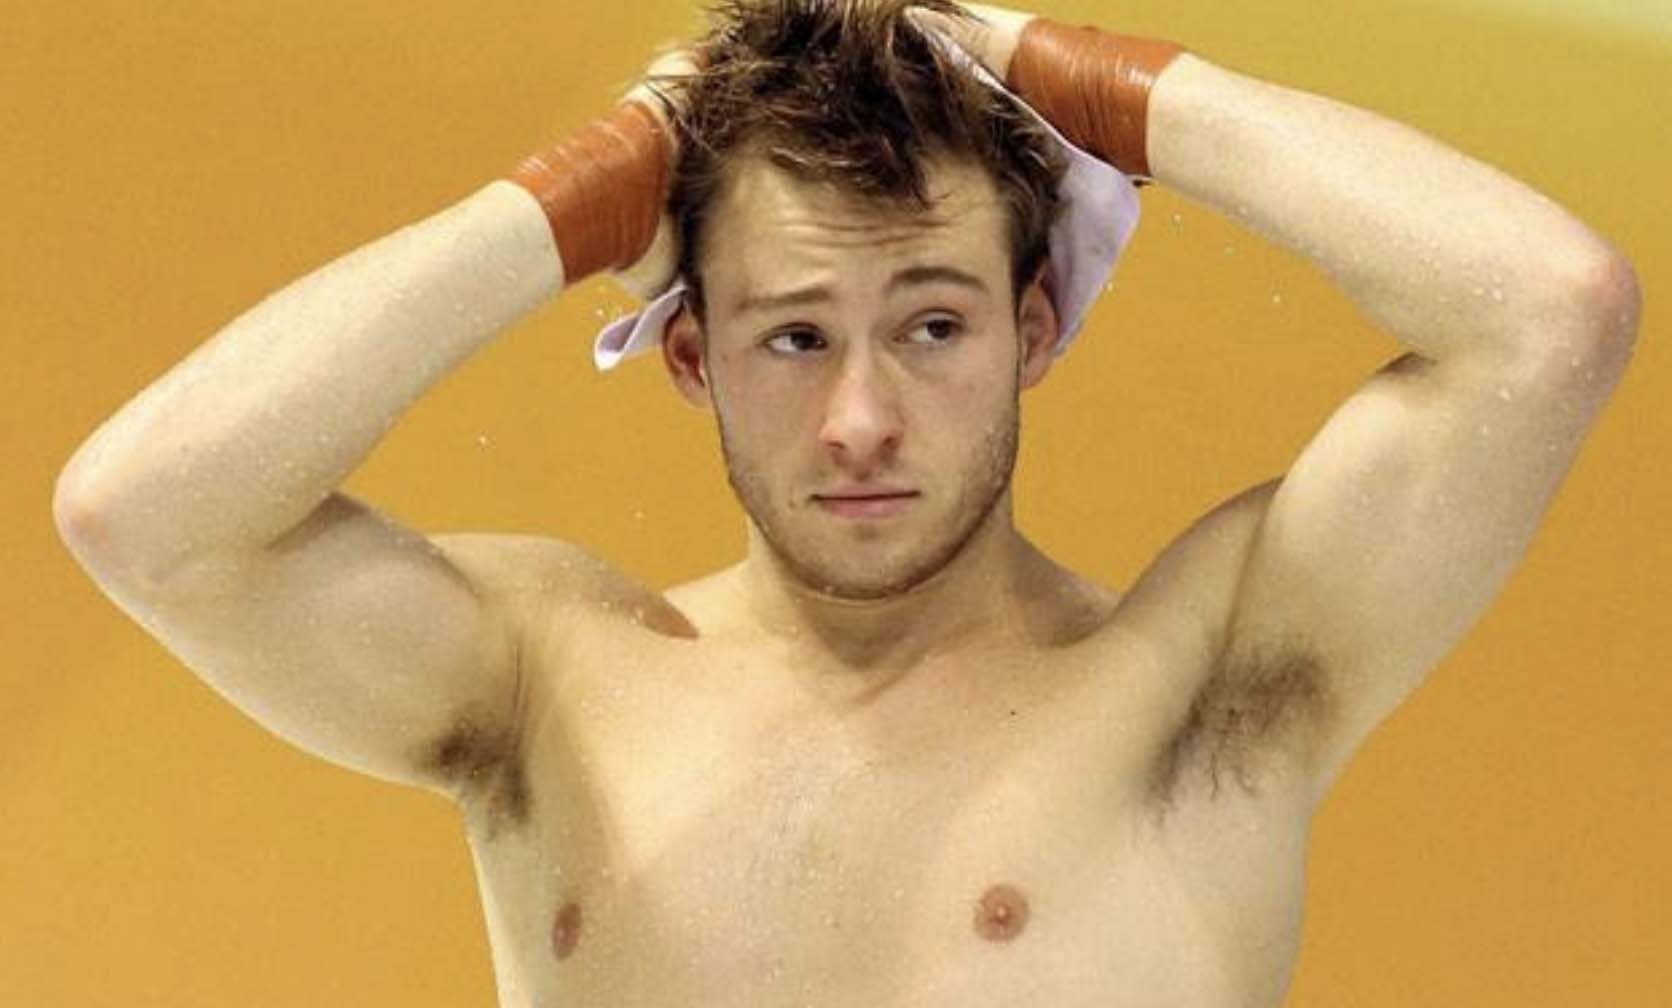 We Asked Australian Diver Matthew Mitcham Why More Gay